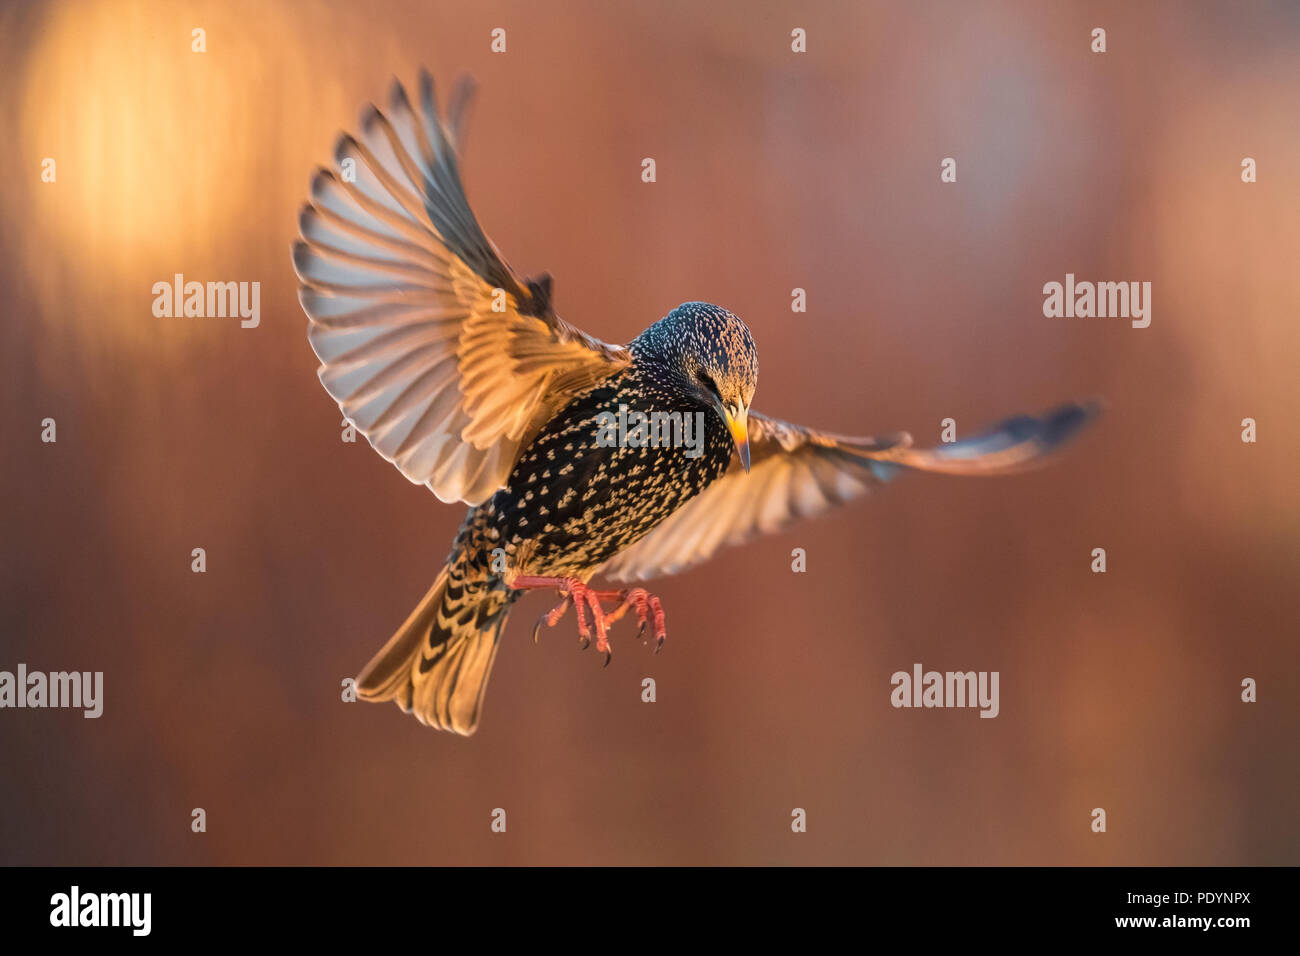 Flying Common Starling, Sturnus vulgaris Stockfoto